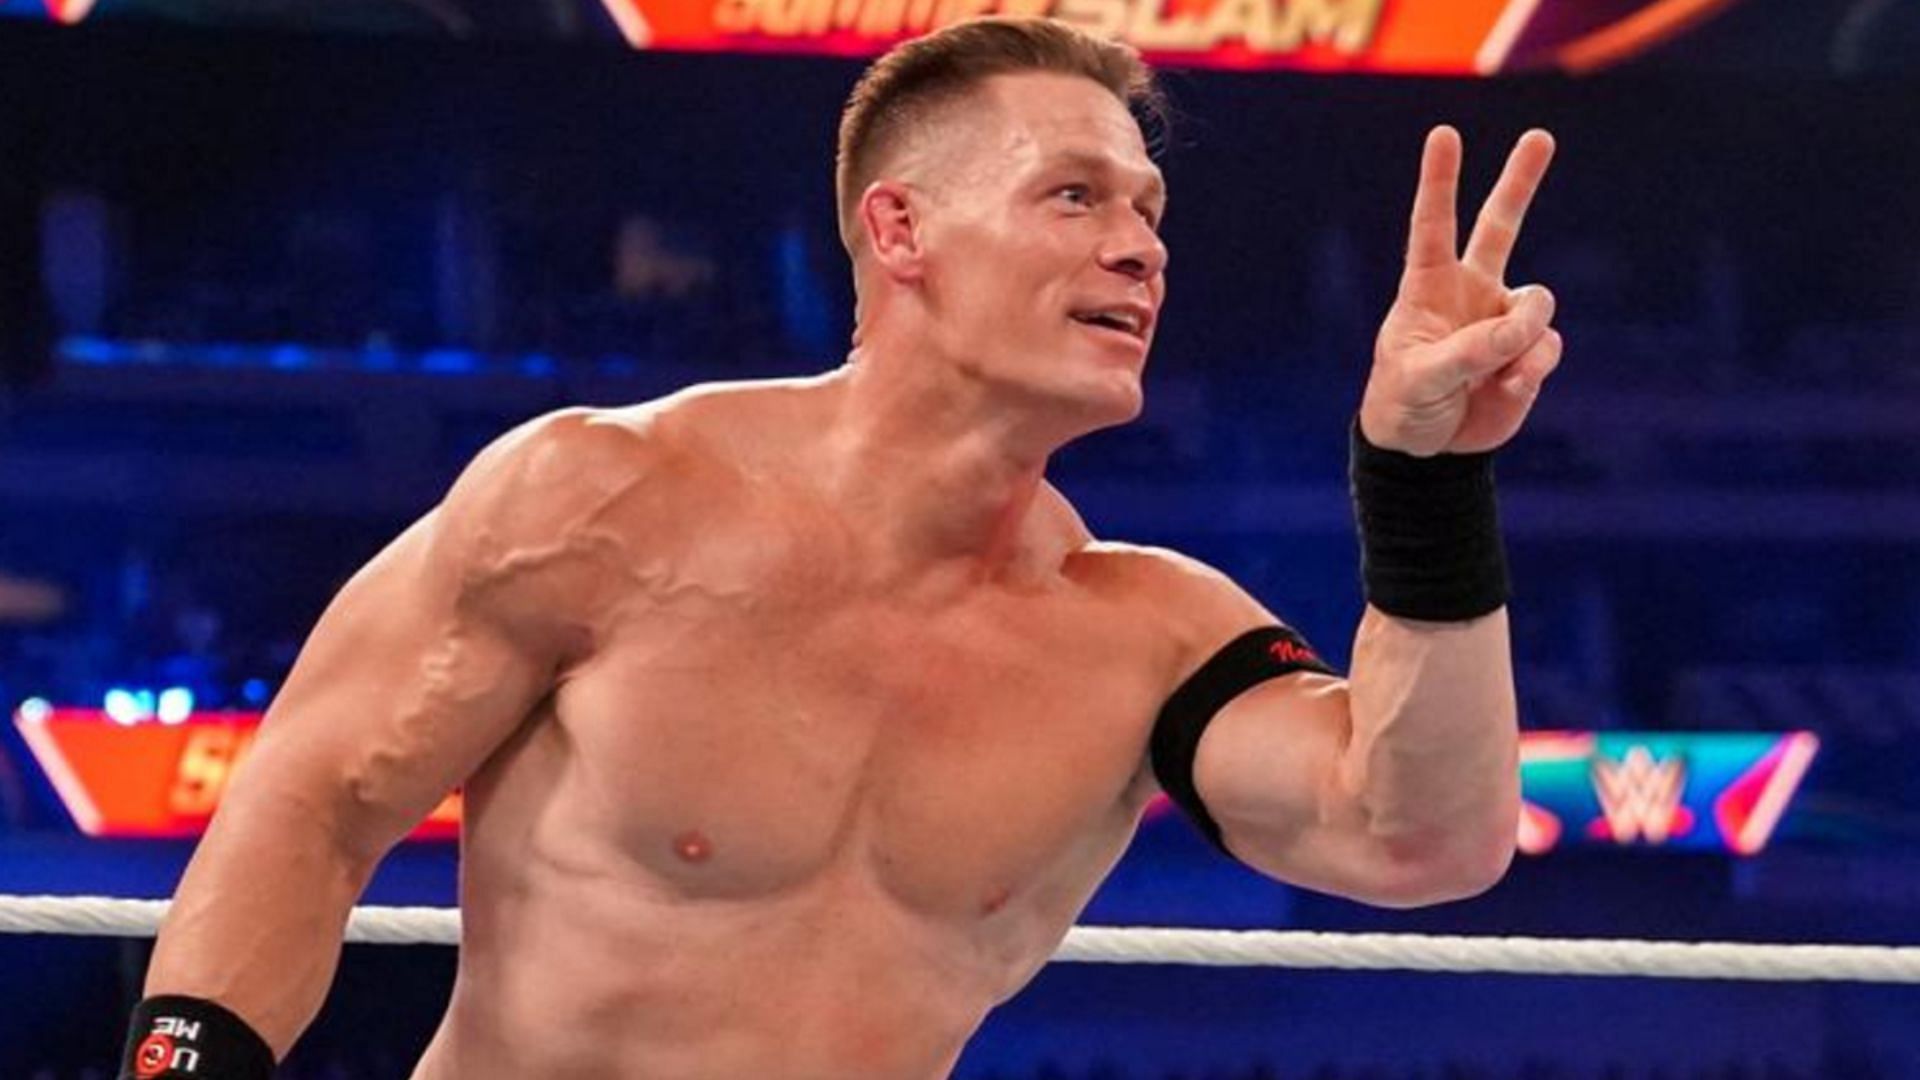 John Cena will wrestle at WWE Fastlane!